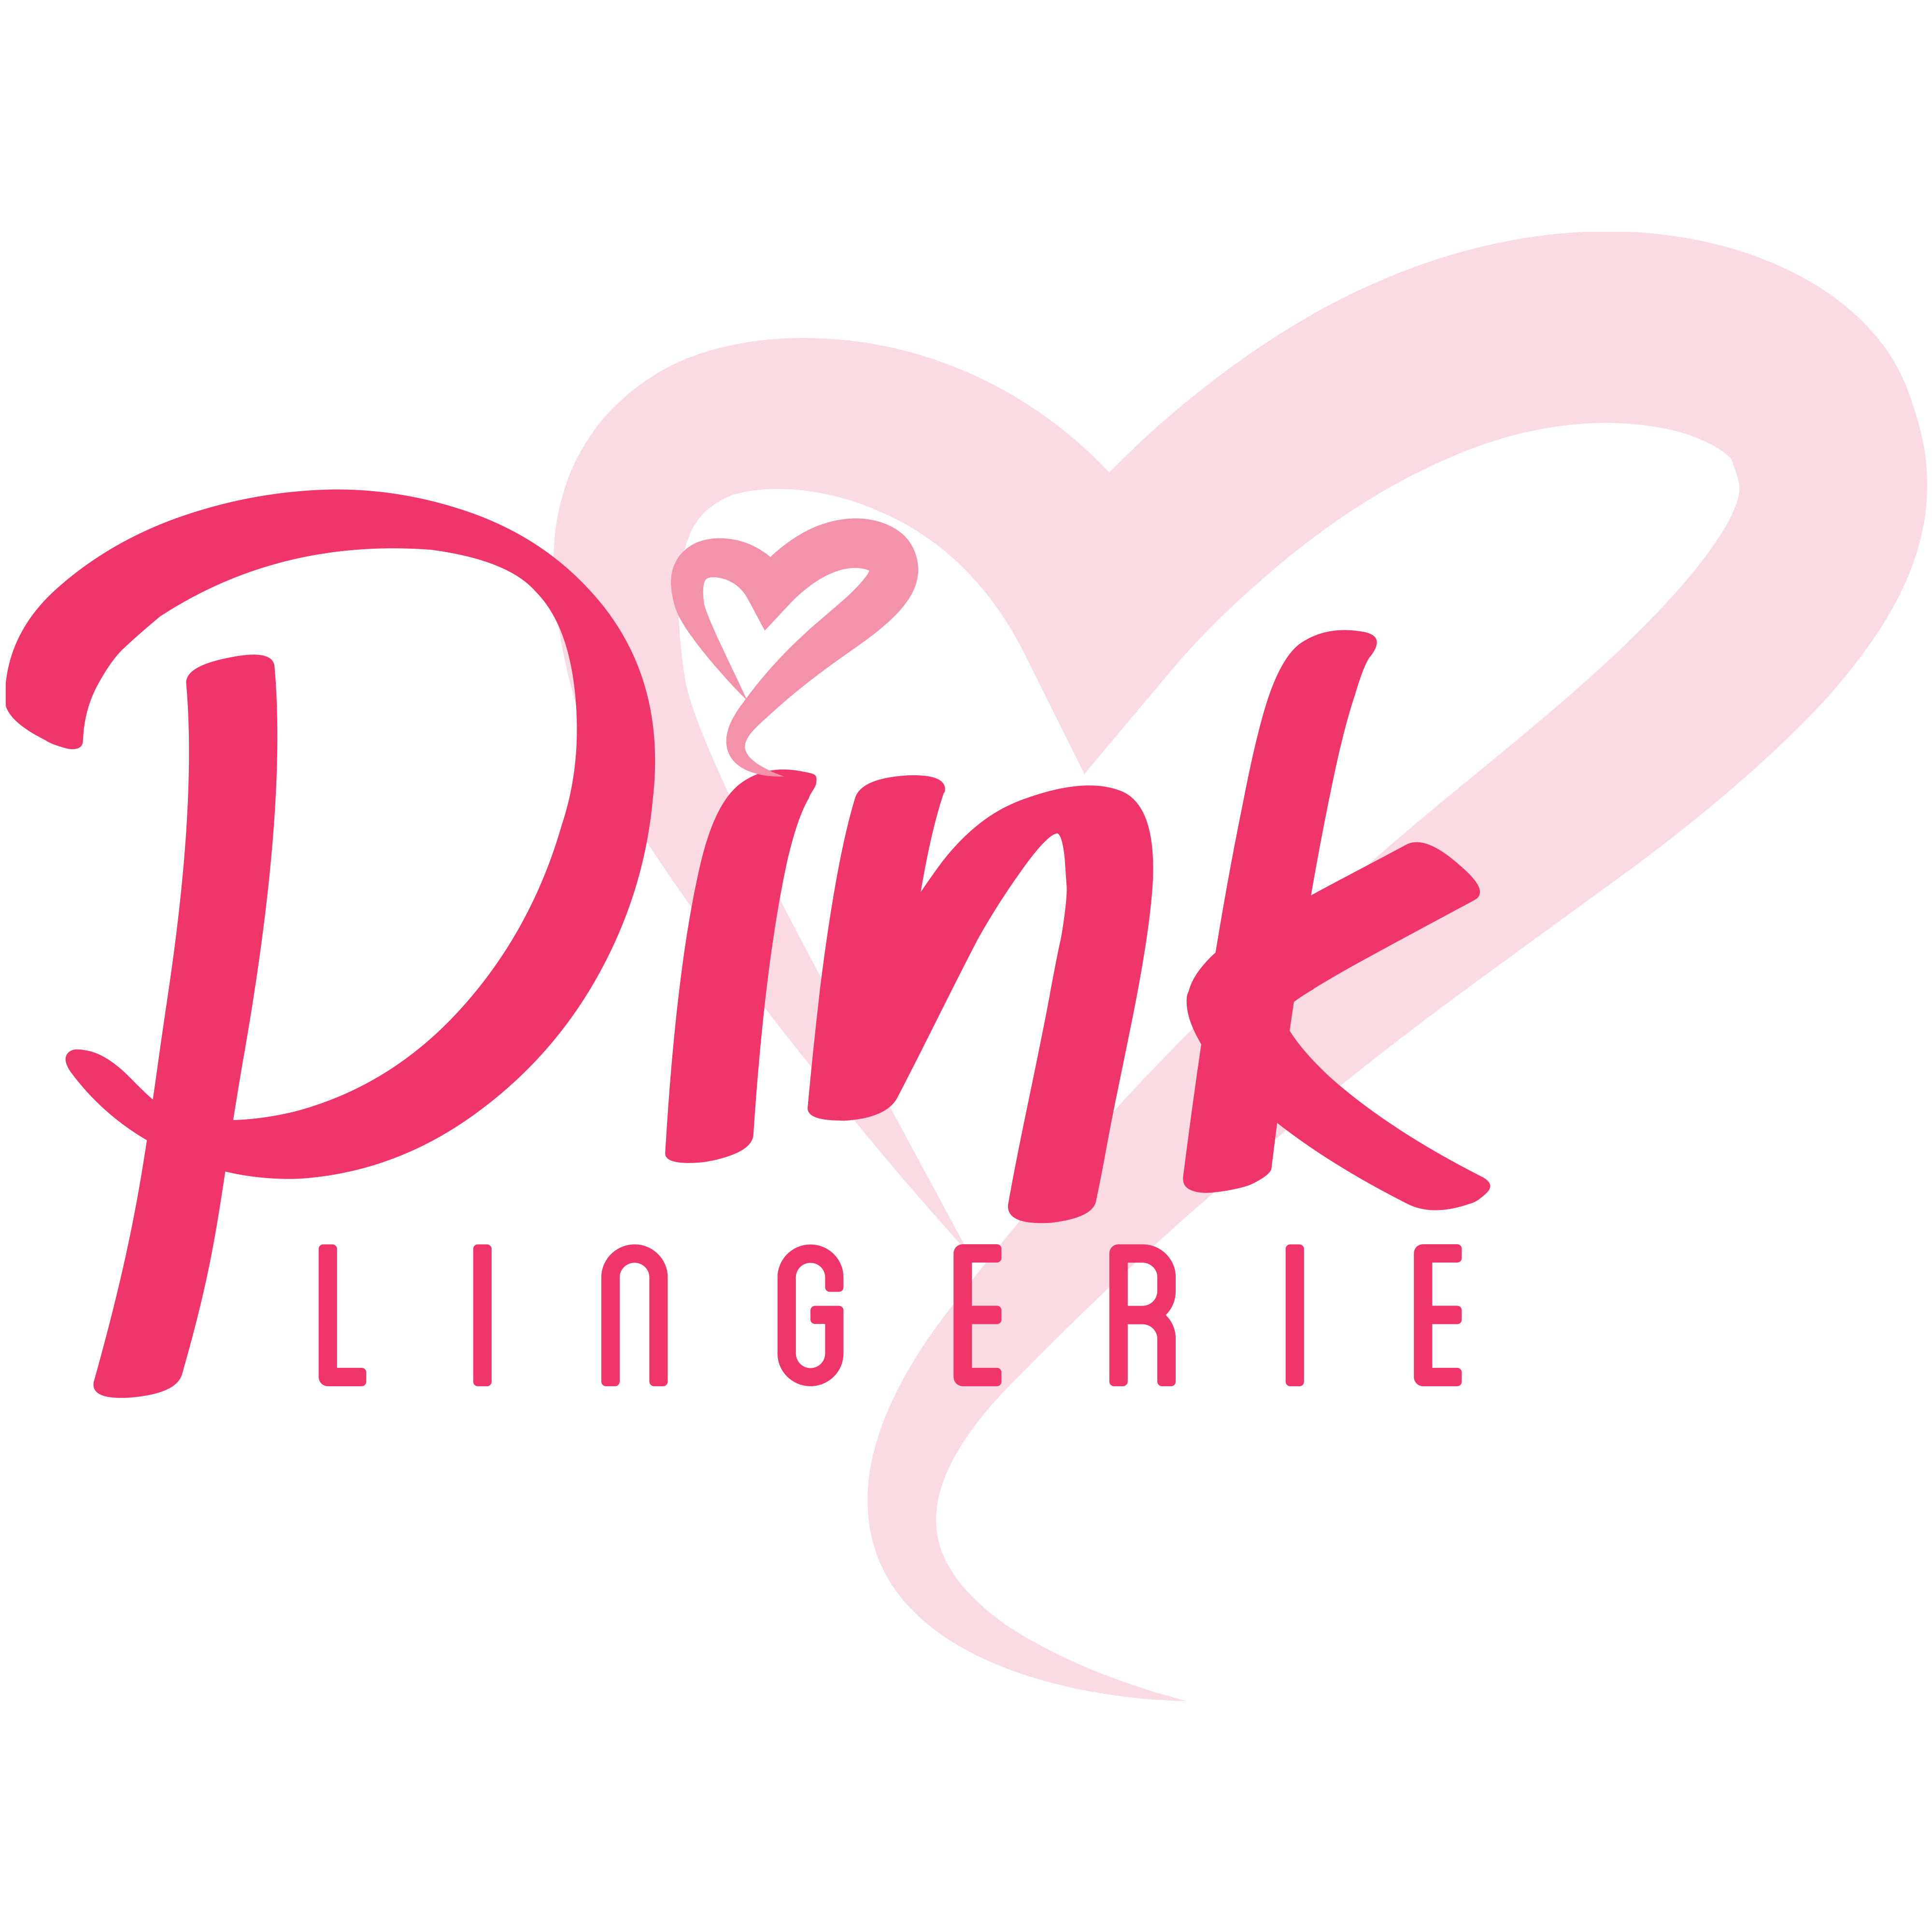 Como Comprar - Pink Lingerie